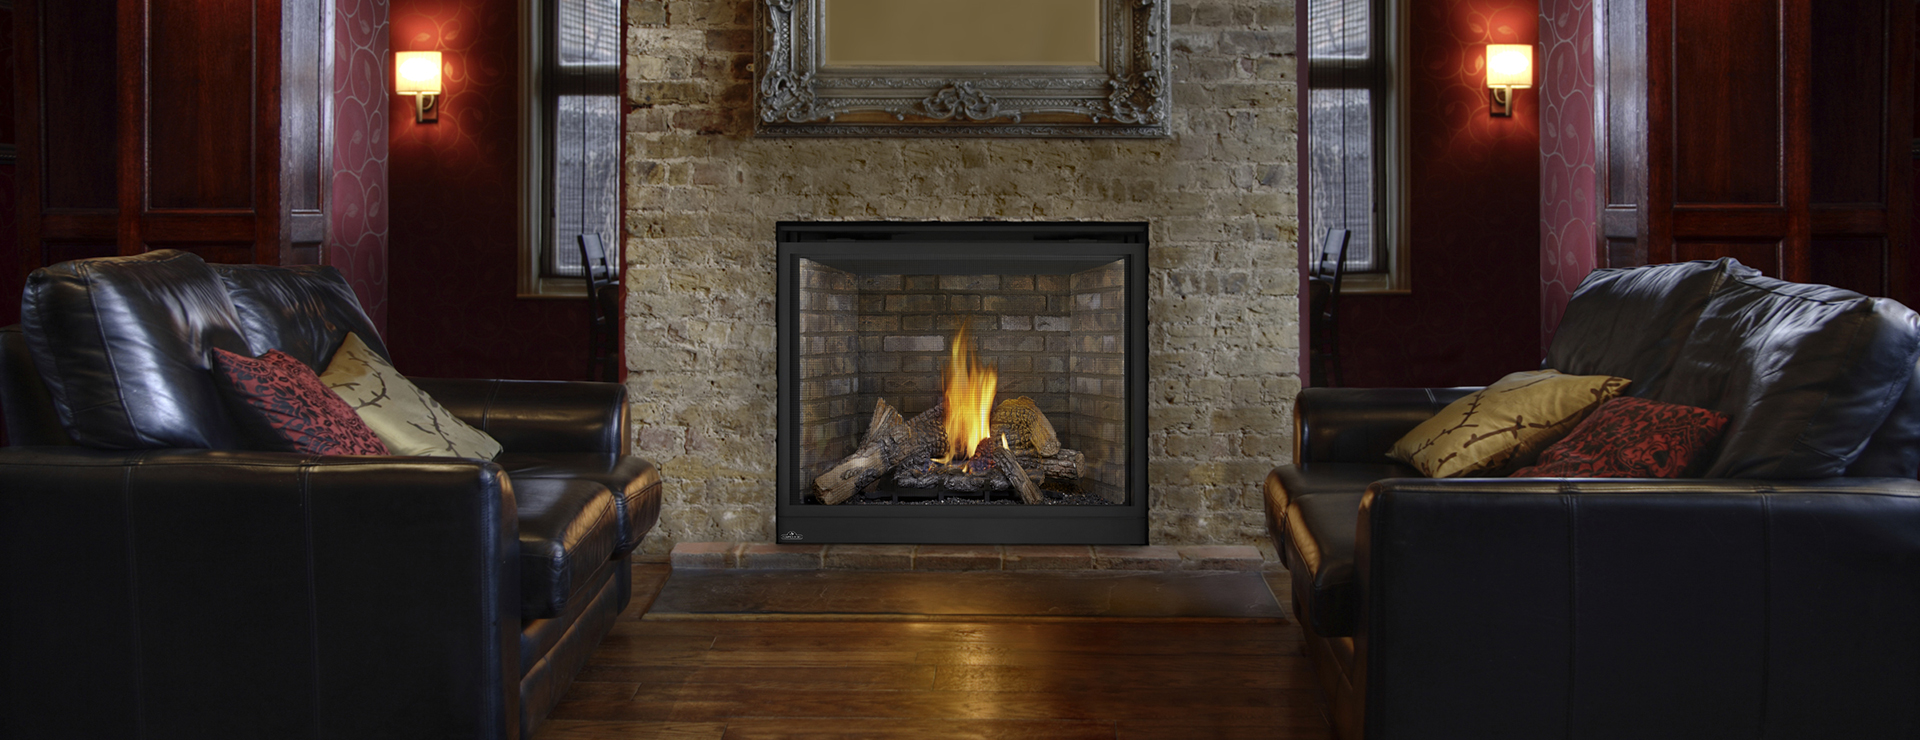 Napoleon Fireplaces - Starfire40 HDX40 - Ray's Fireplaces - Brandon, MB